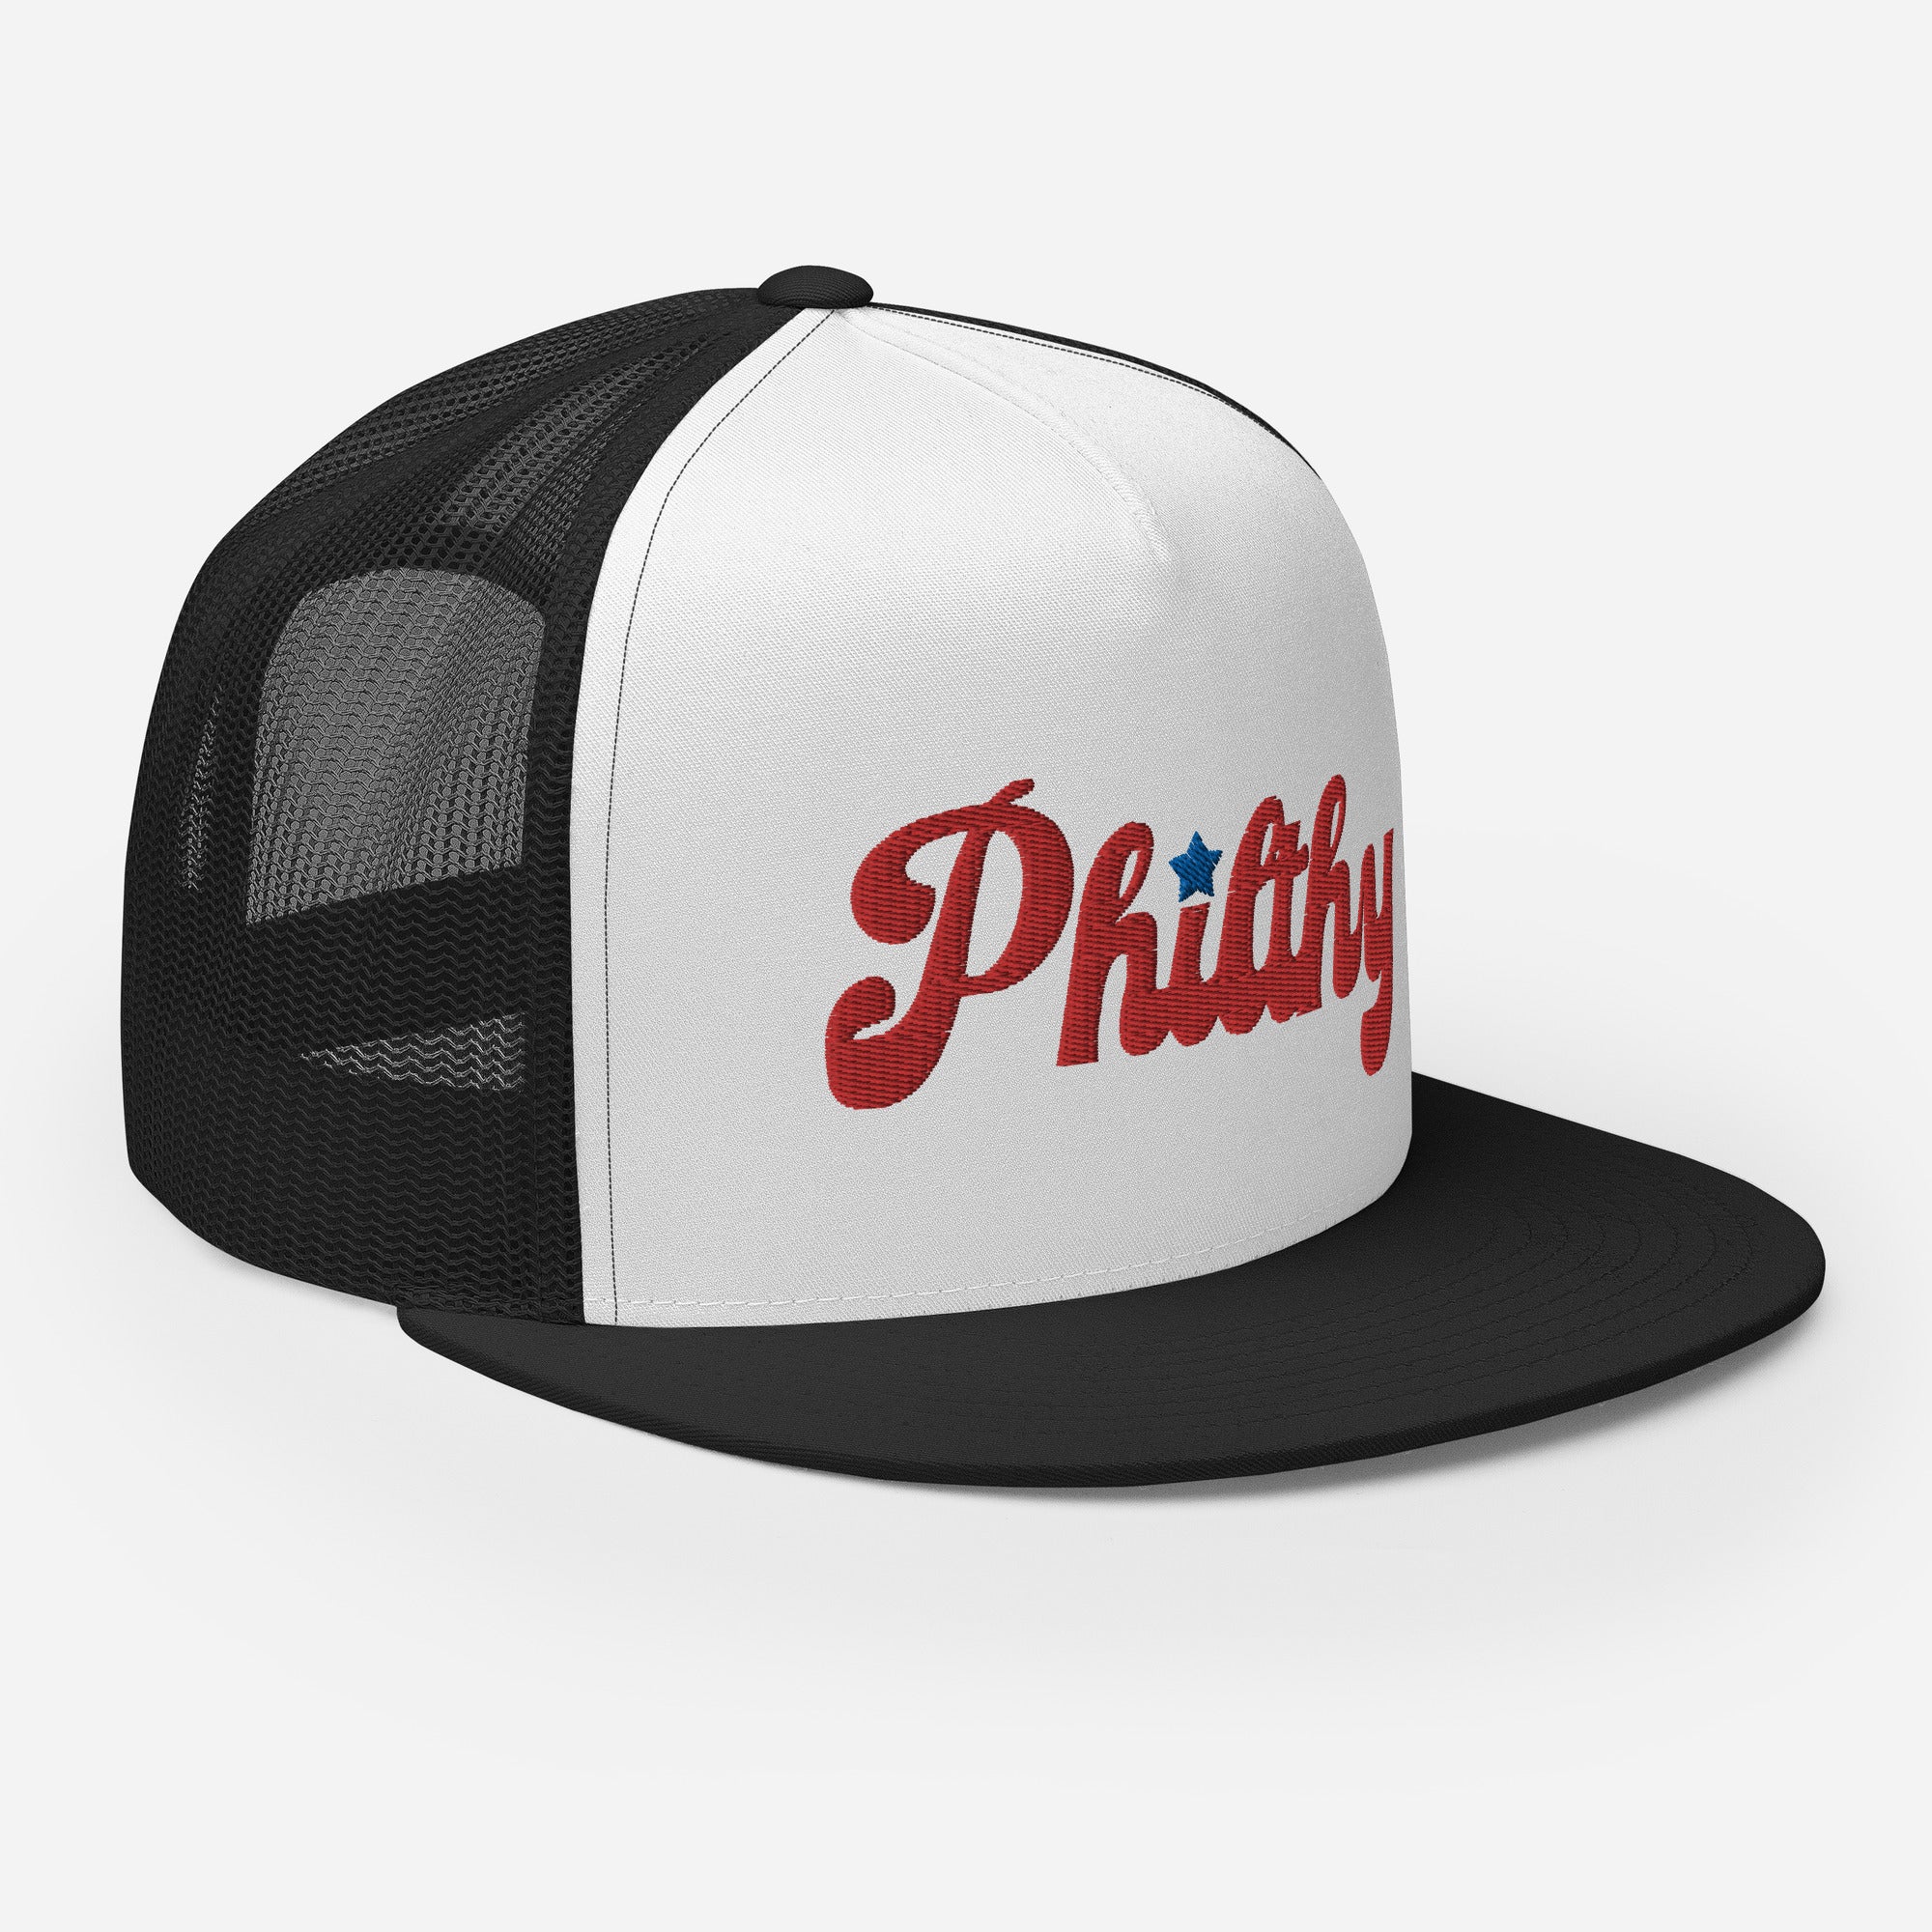 "Philthy" Trucker Hat